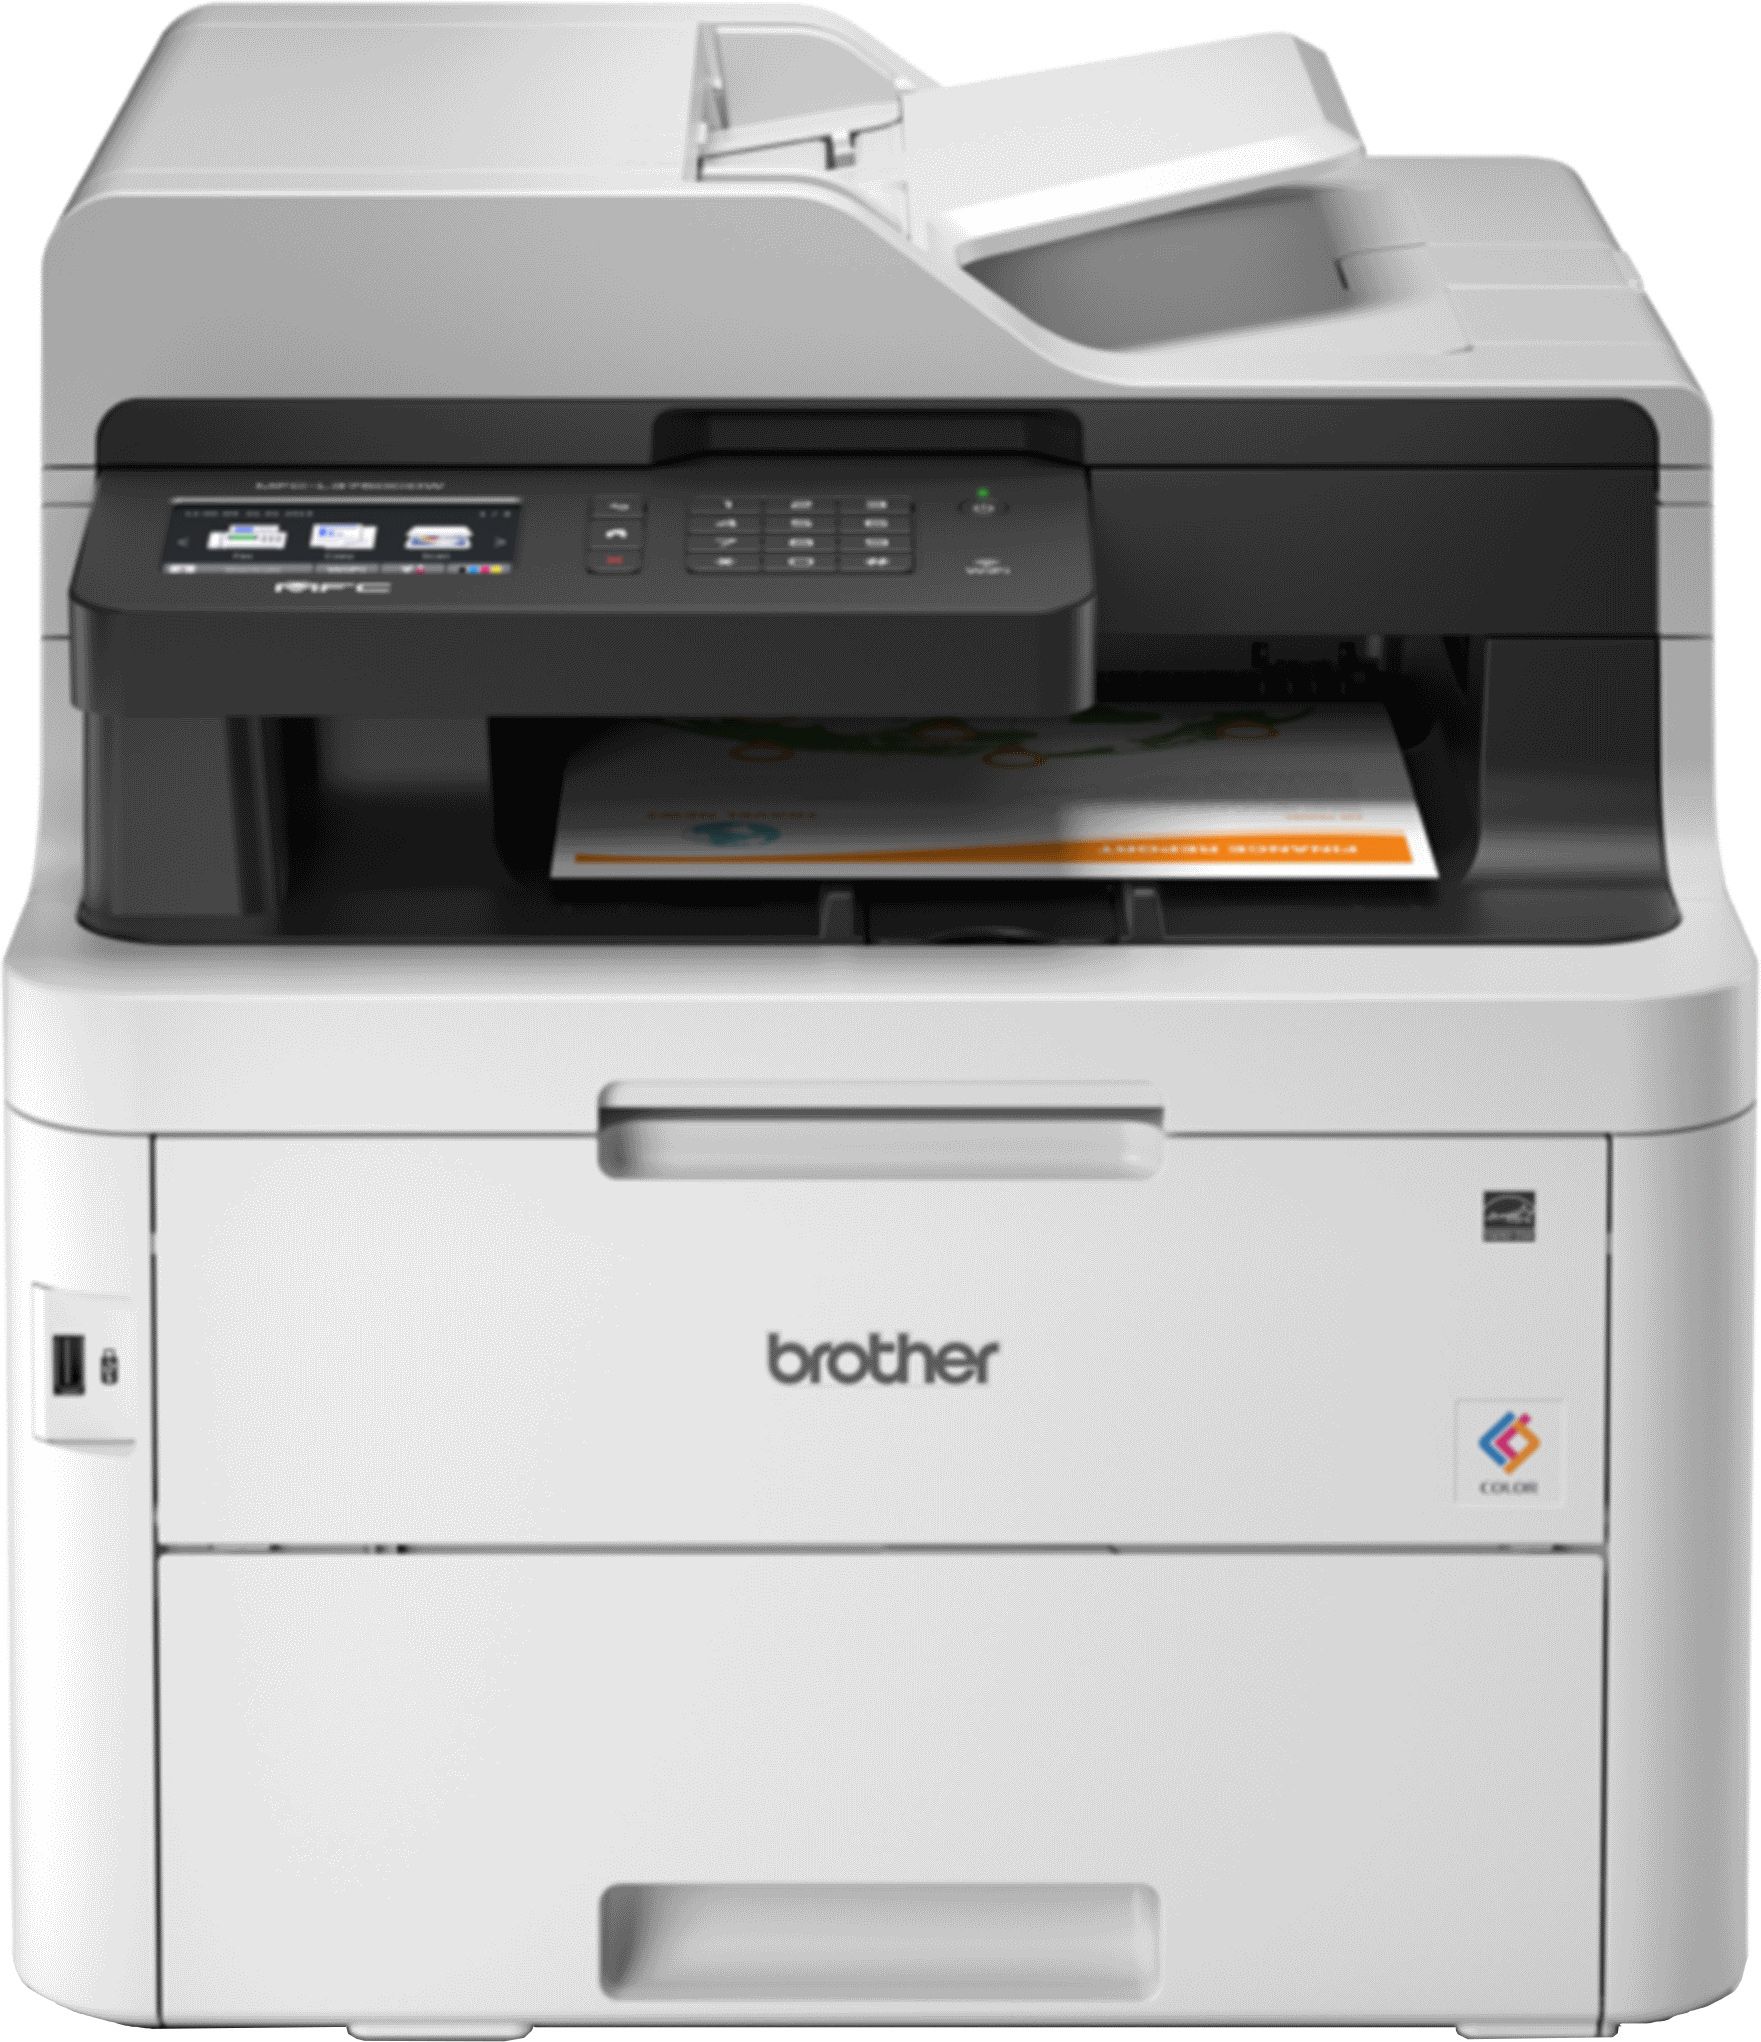 Brother MFC-L3750CDW Laser Printer - Grey